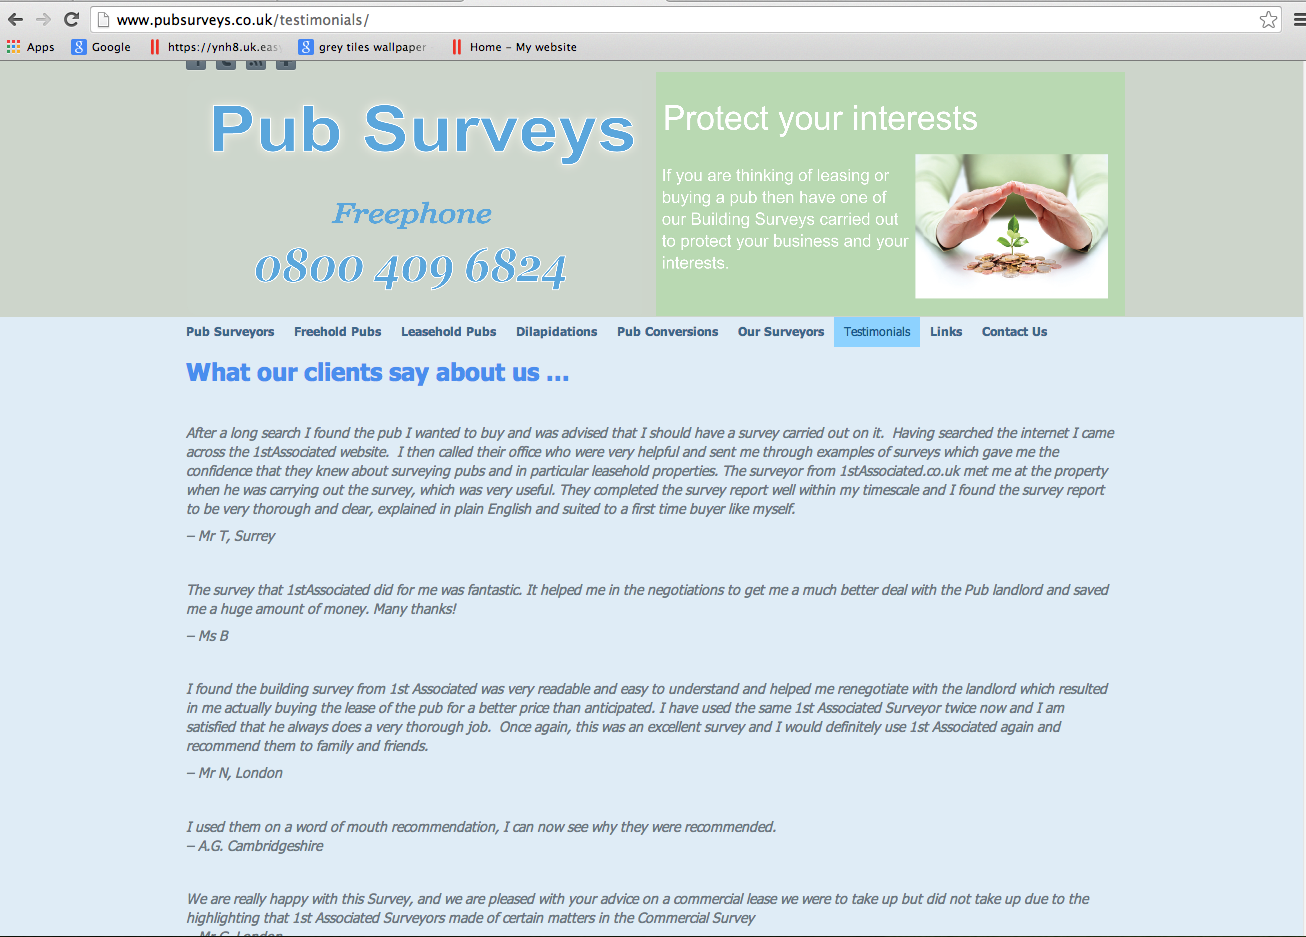 Pubsurveys.co.uk - Testimonials